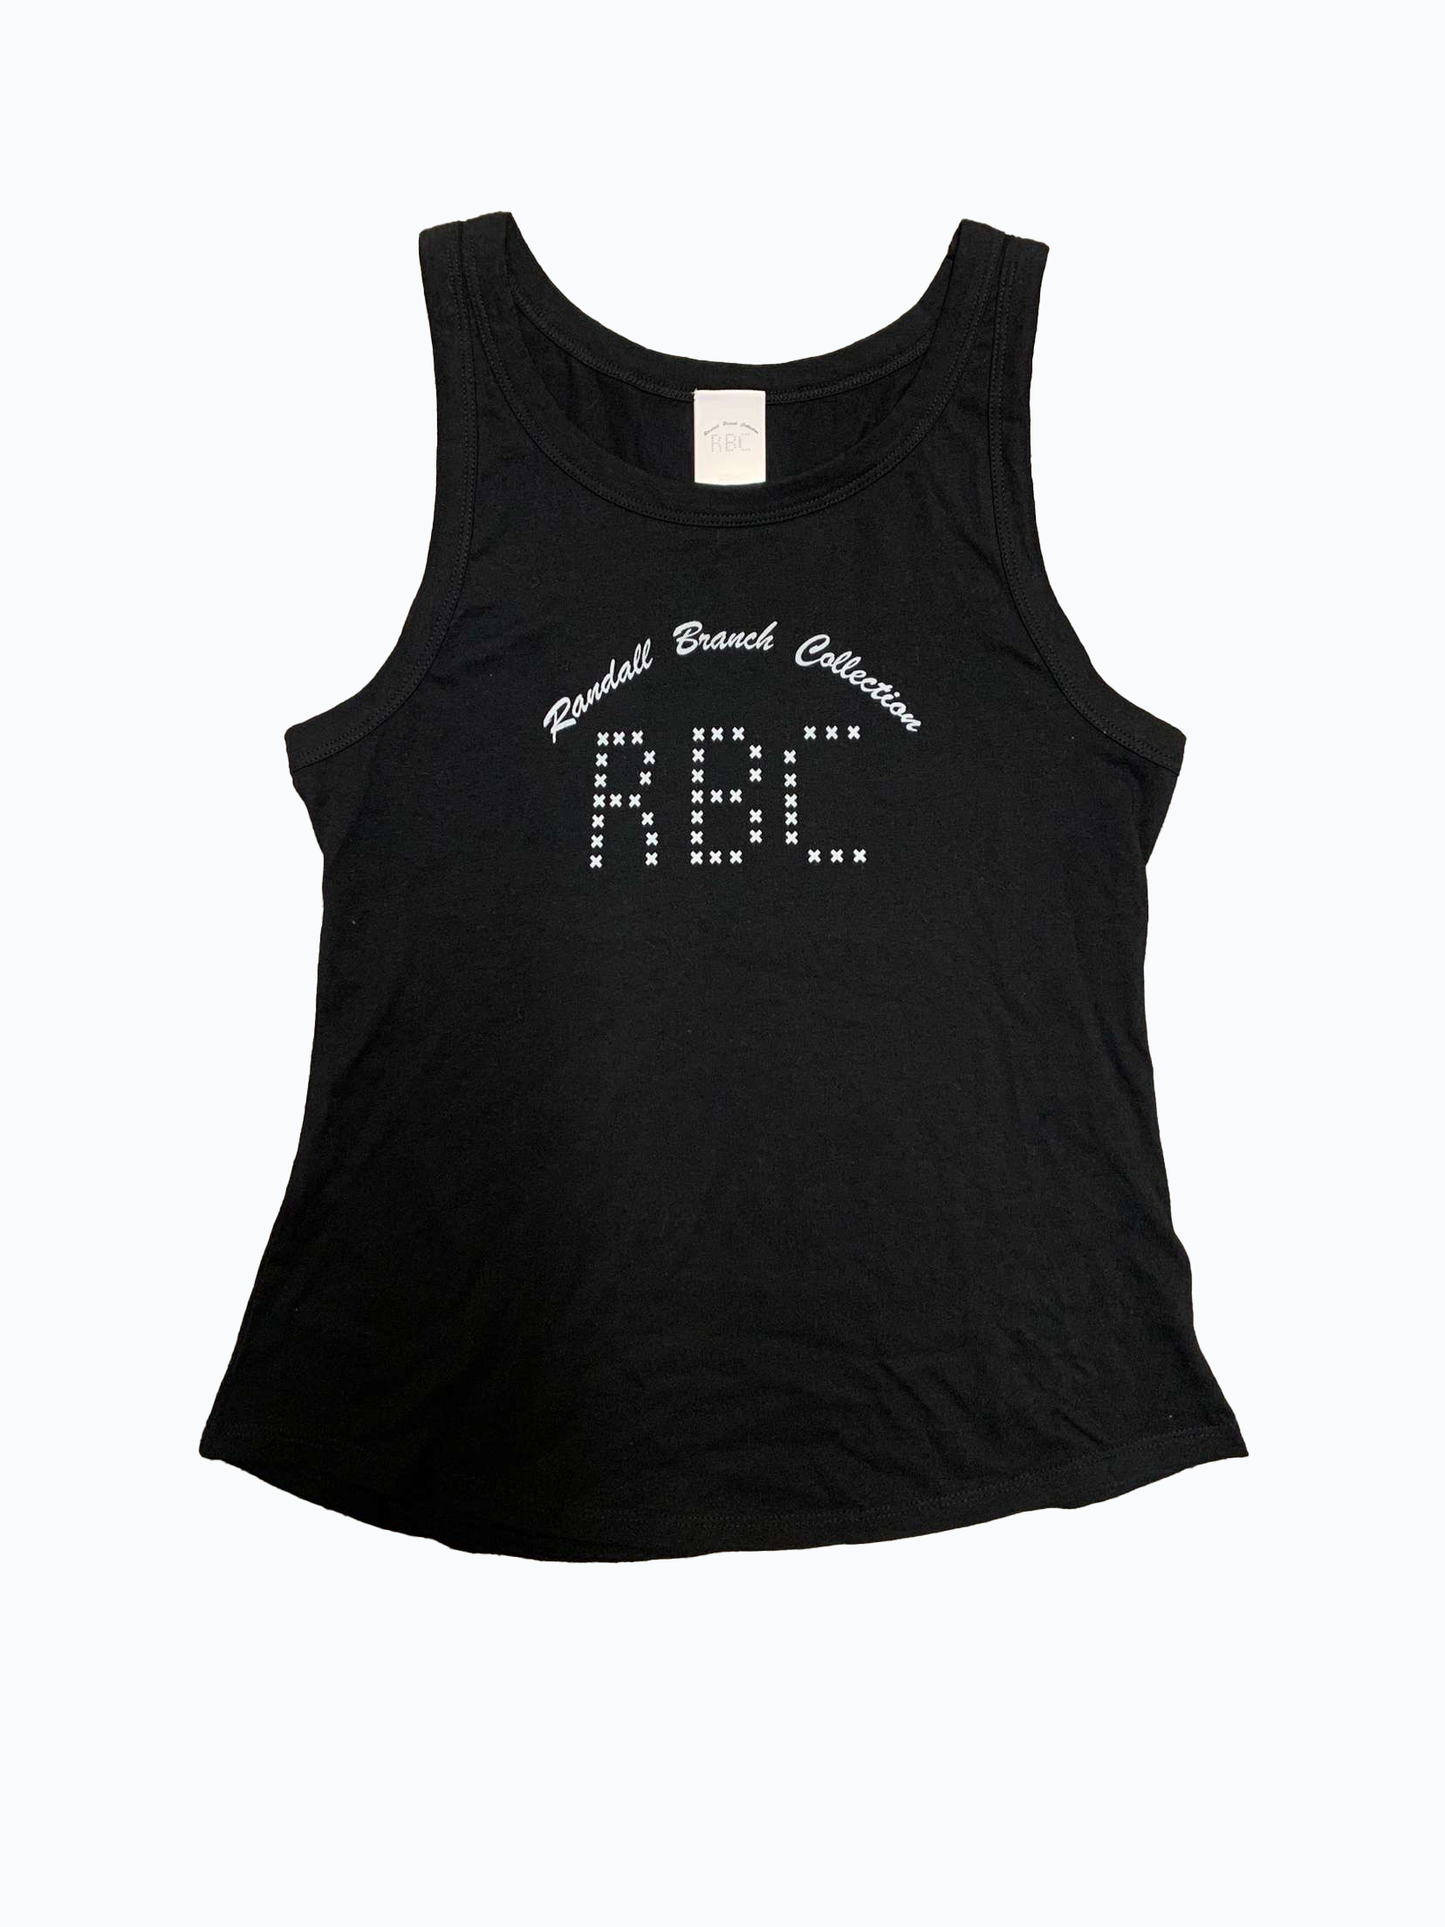 RBC black logo women's tank